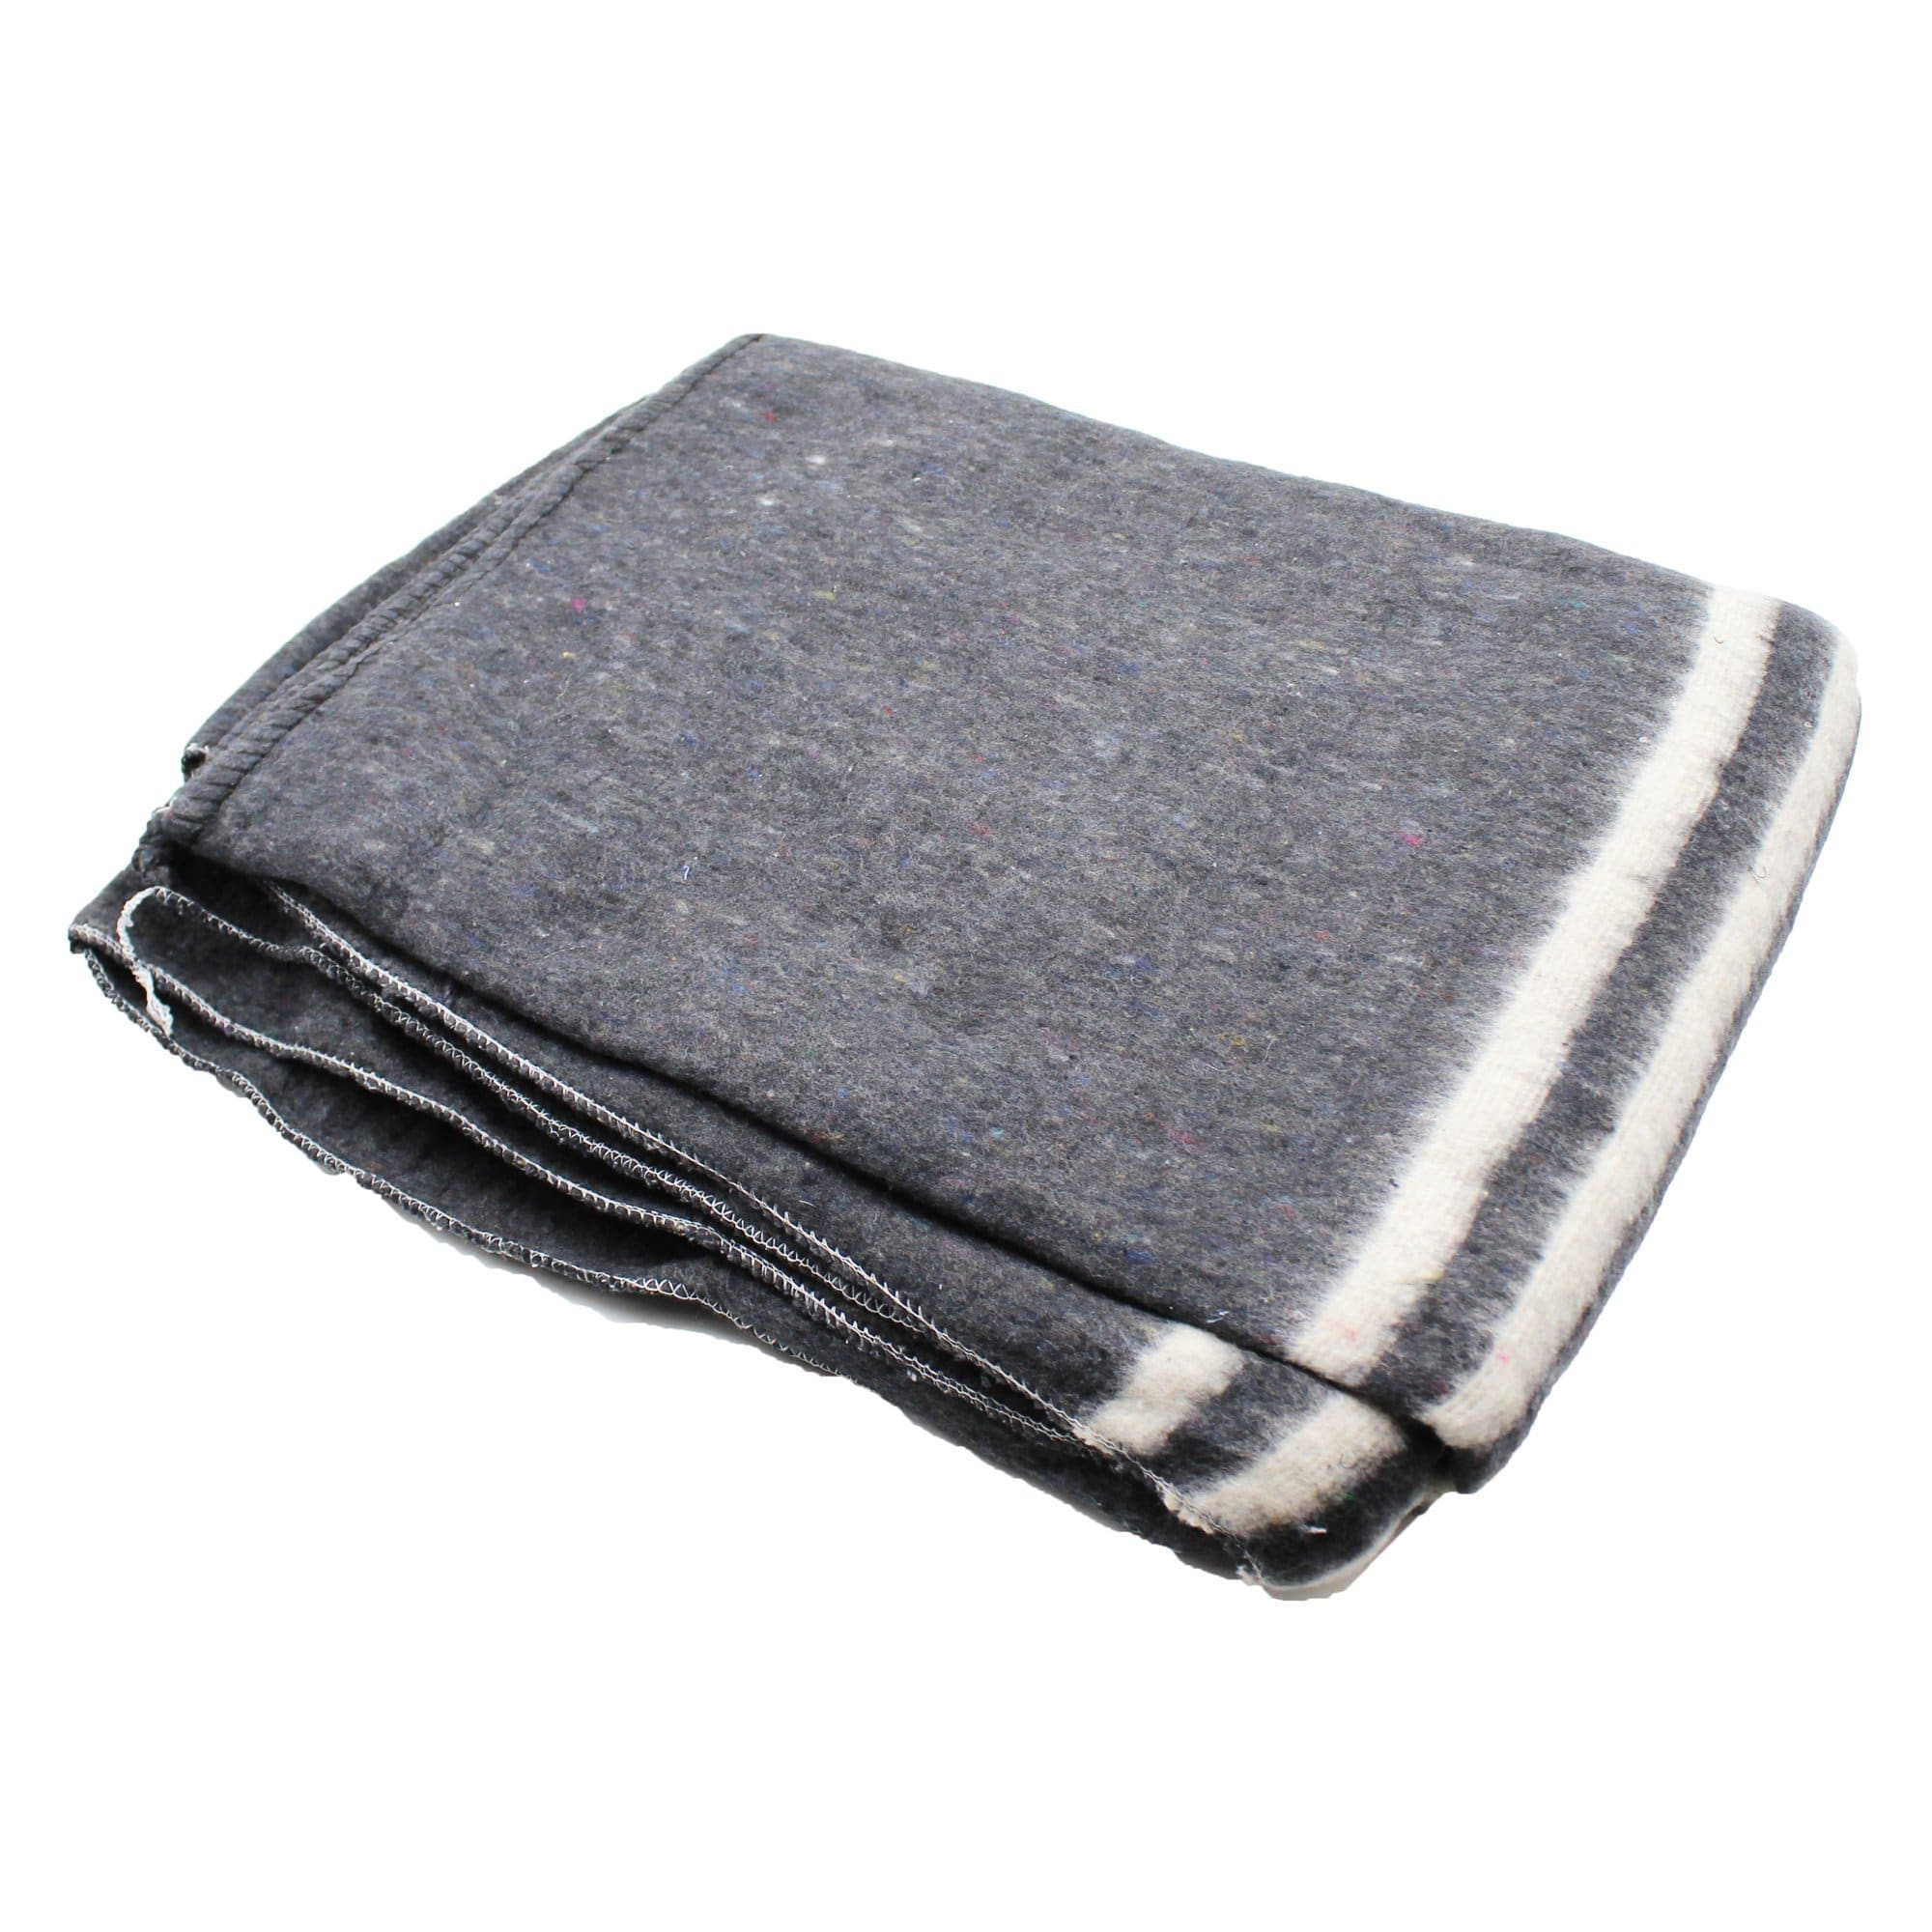 2 lb. Gray Emergency Relief Wool Blanket 51'' x 80'' - 50% Wool - Emergency  Blankets, Mylar Sleeping Bags Cots